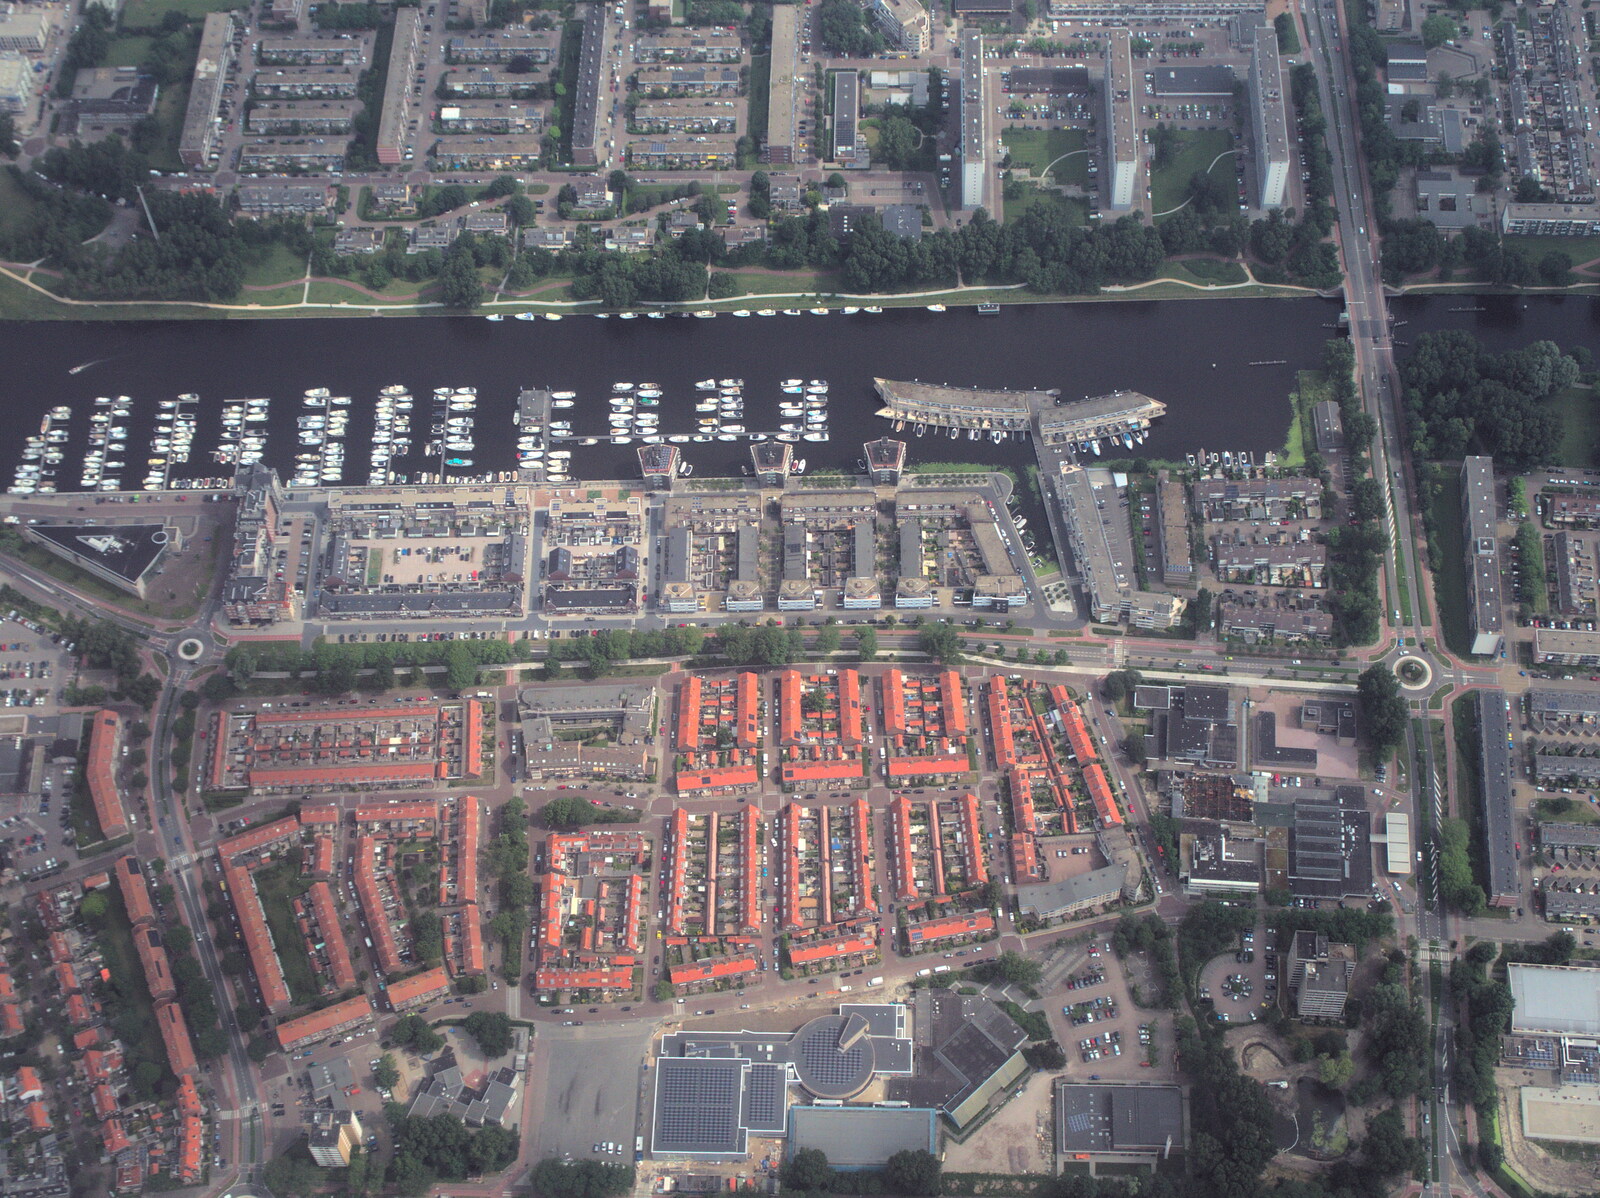 Somewhere over Amsterdam from A Postcard From Asperen, Gelderland, Netherlands - 9th June 2018